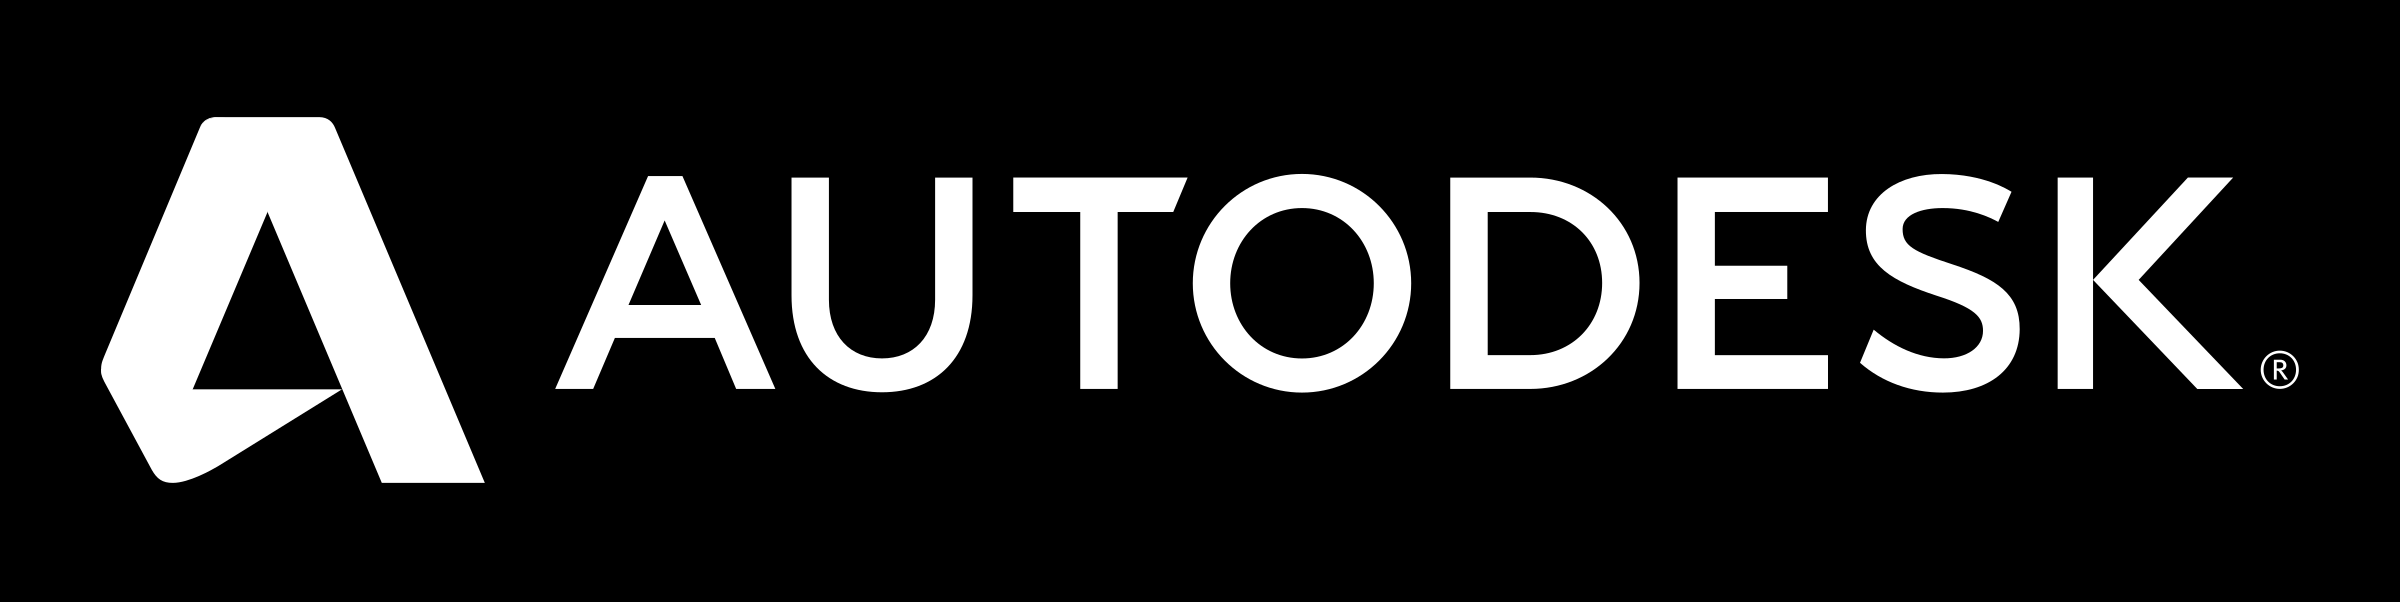 autodesk-logo-reverse